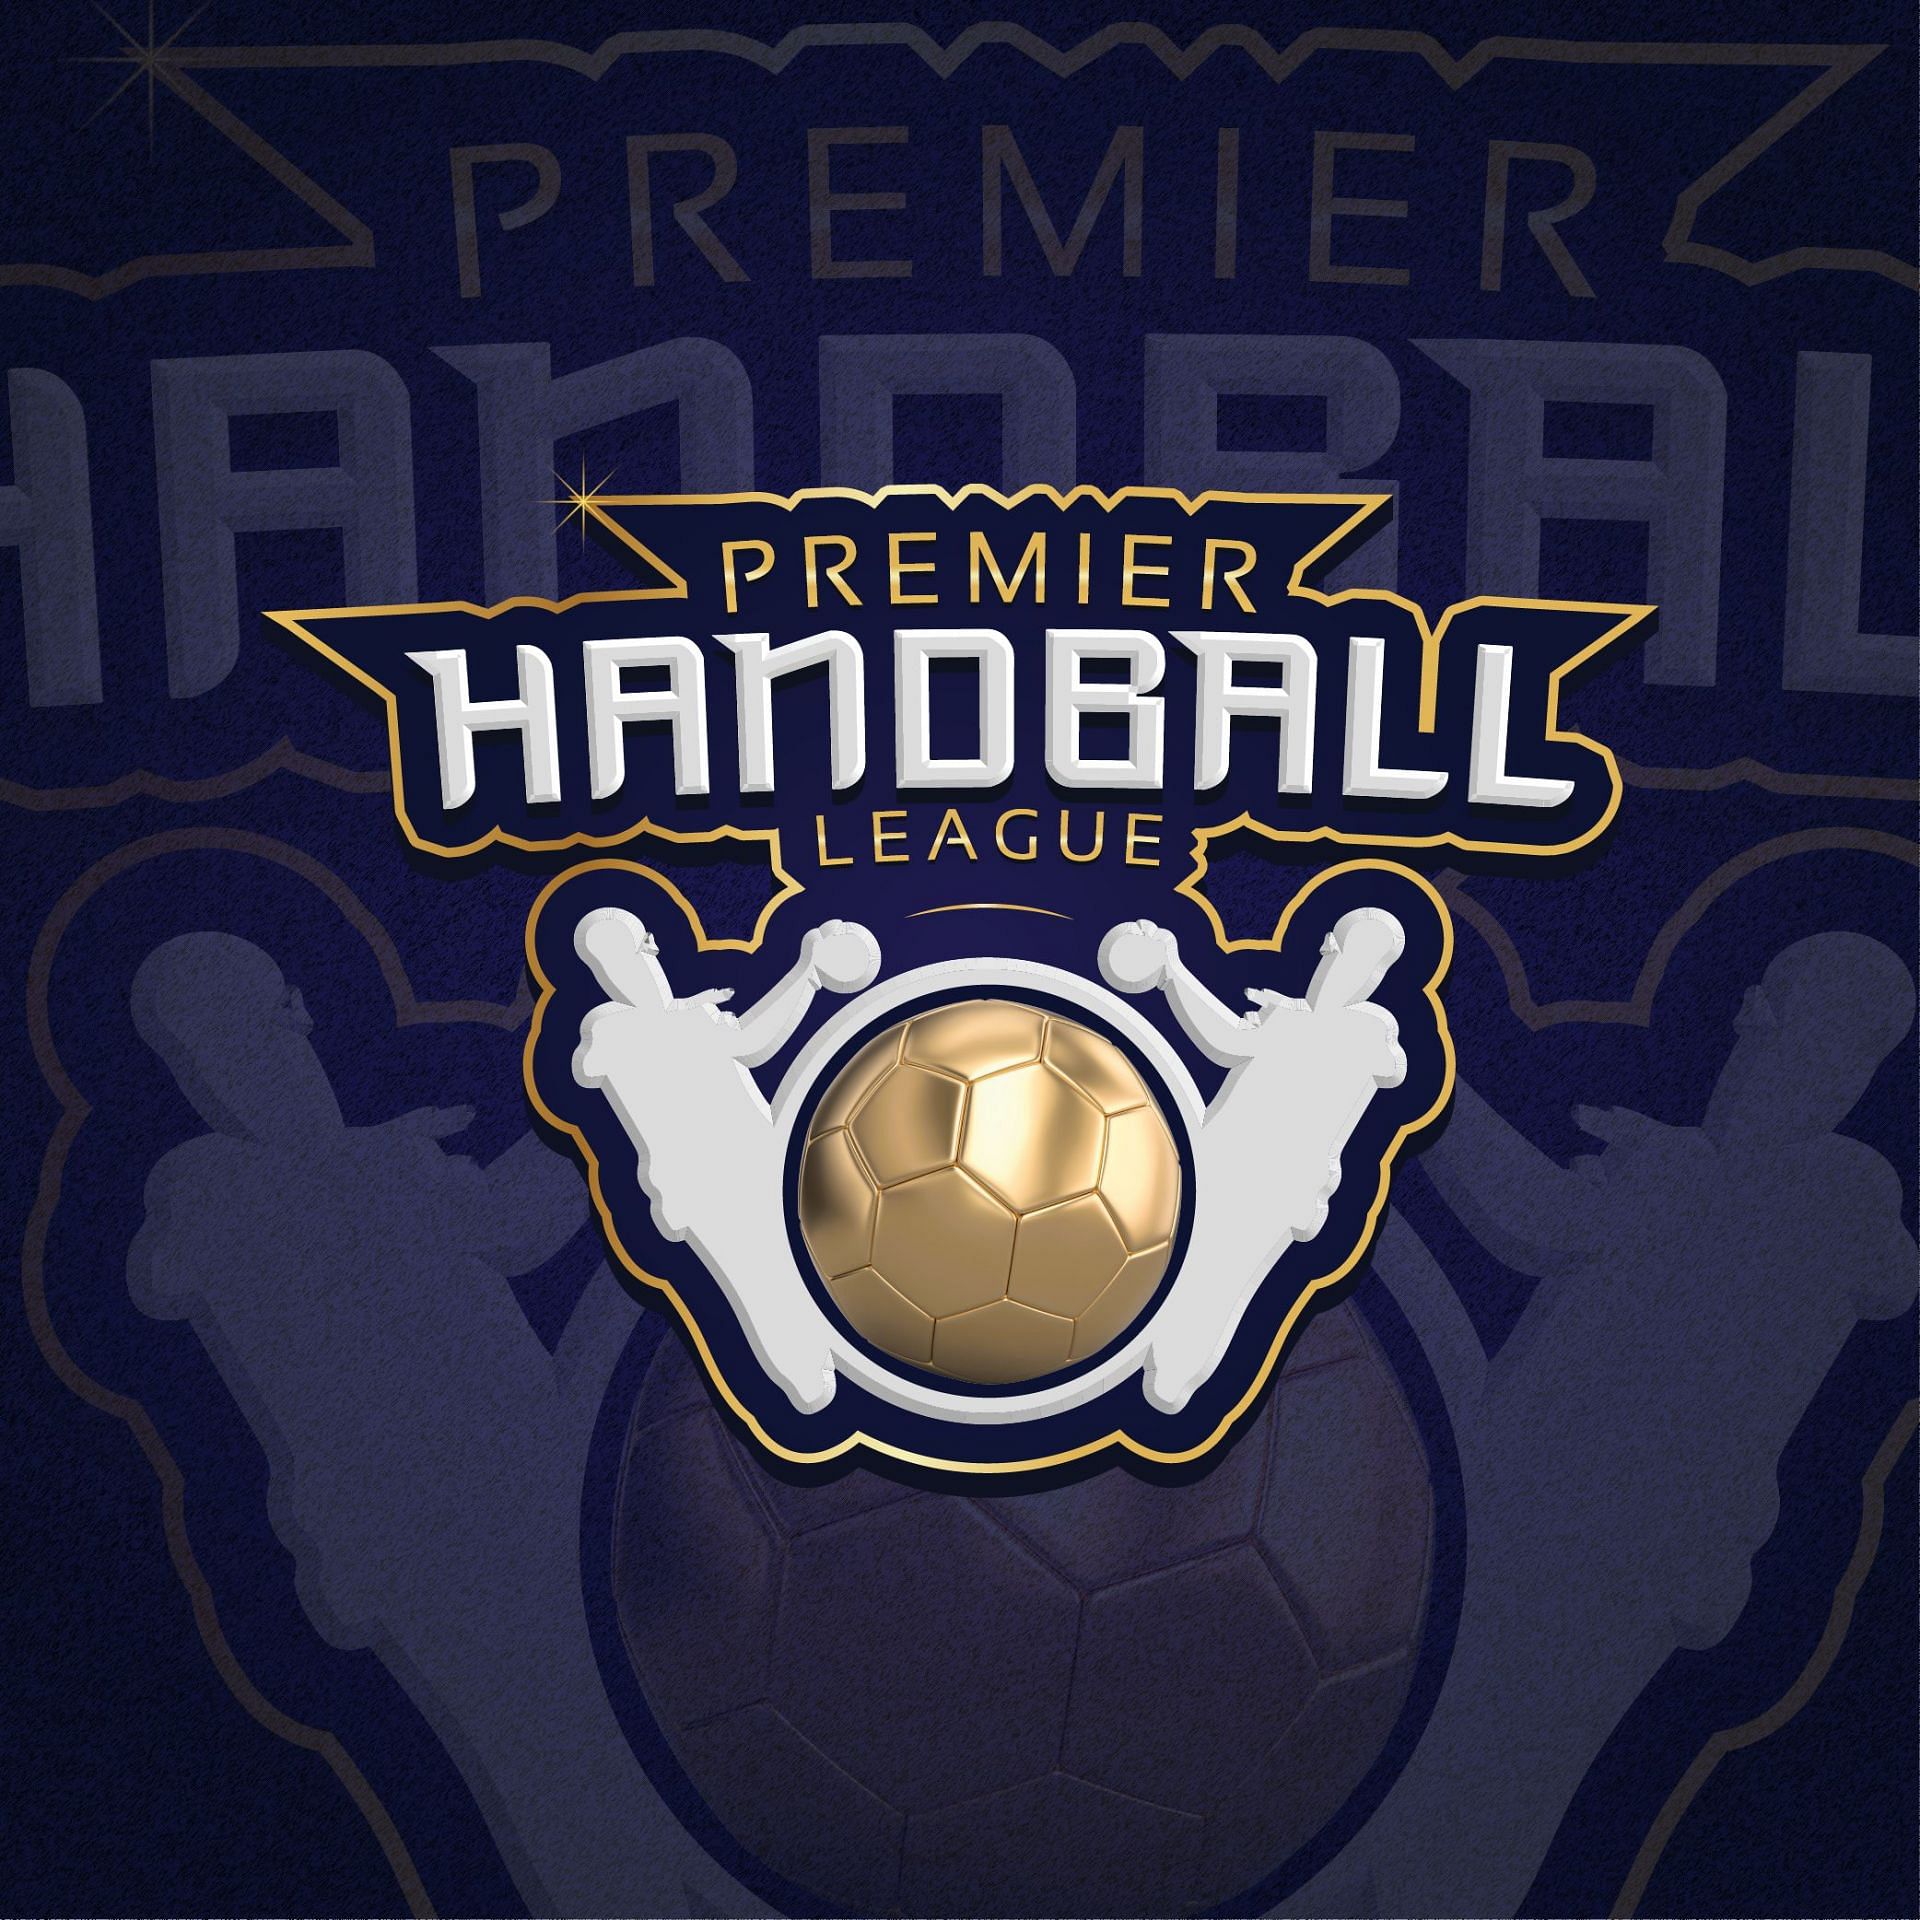 The logo of the Premier Handball League.